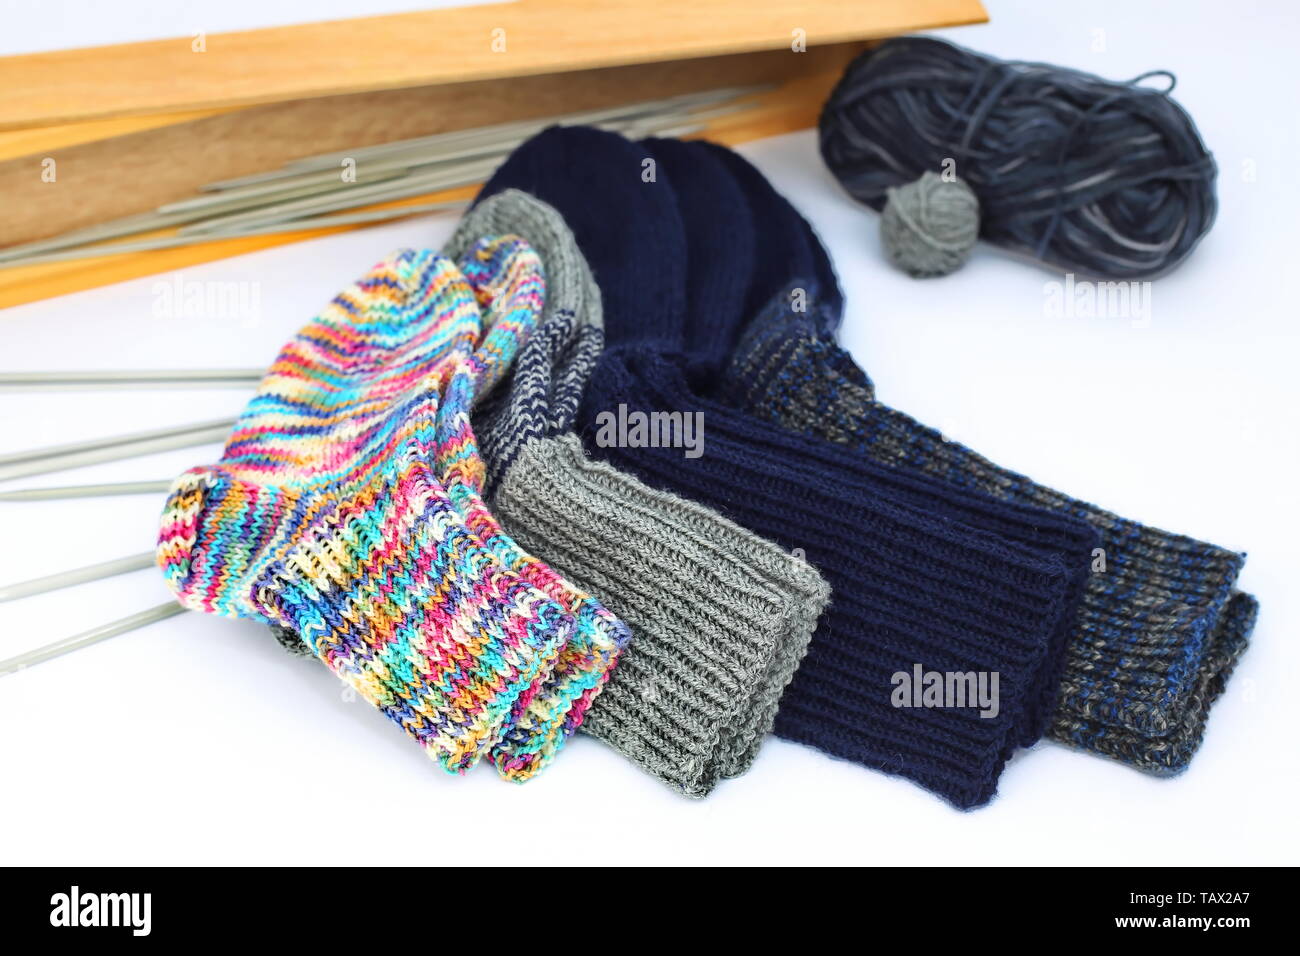 Self-made socks as decoration Stock Photo